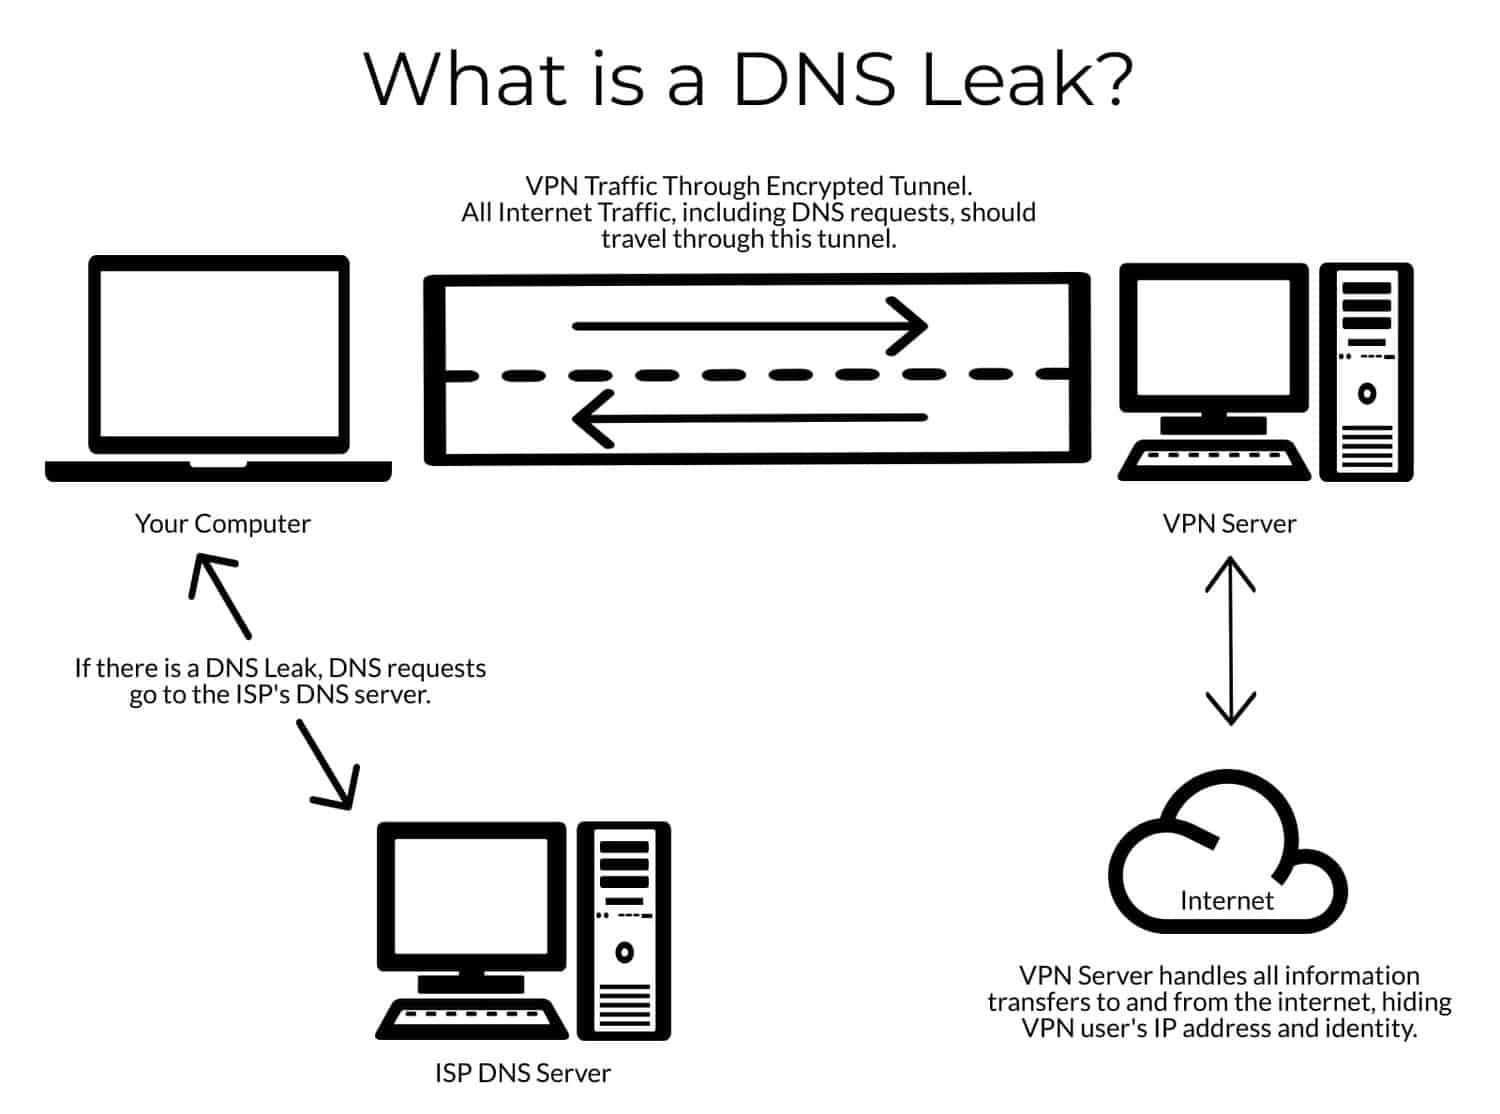 leaks exist.